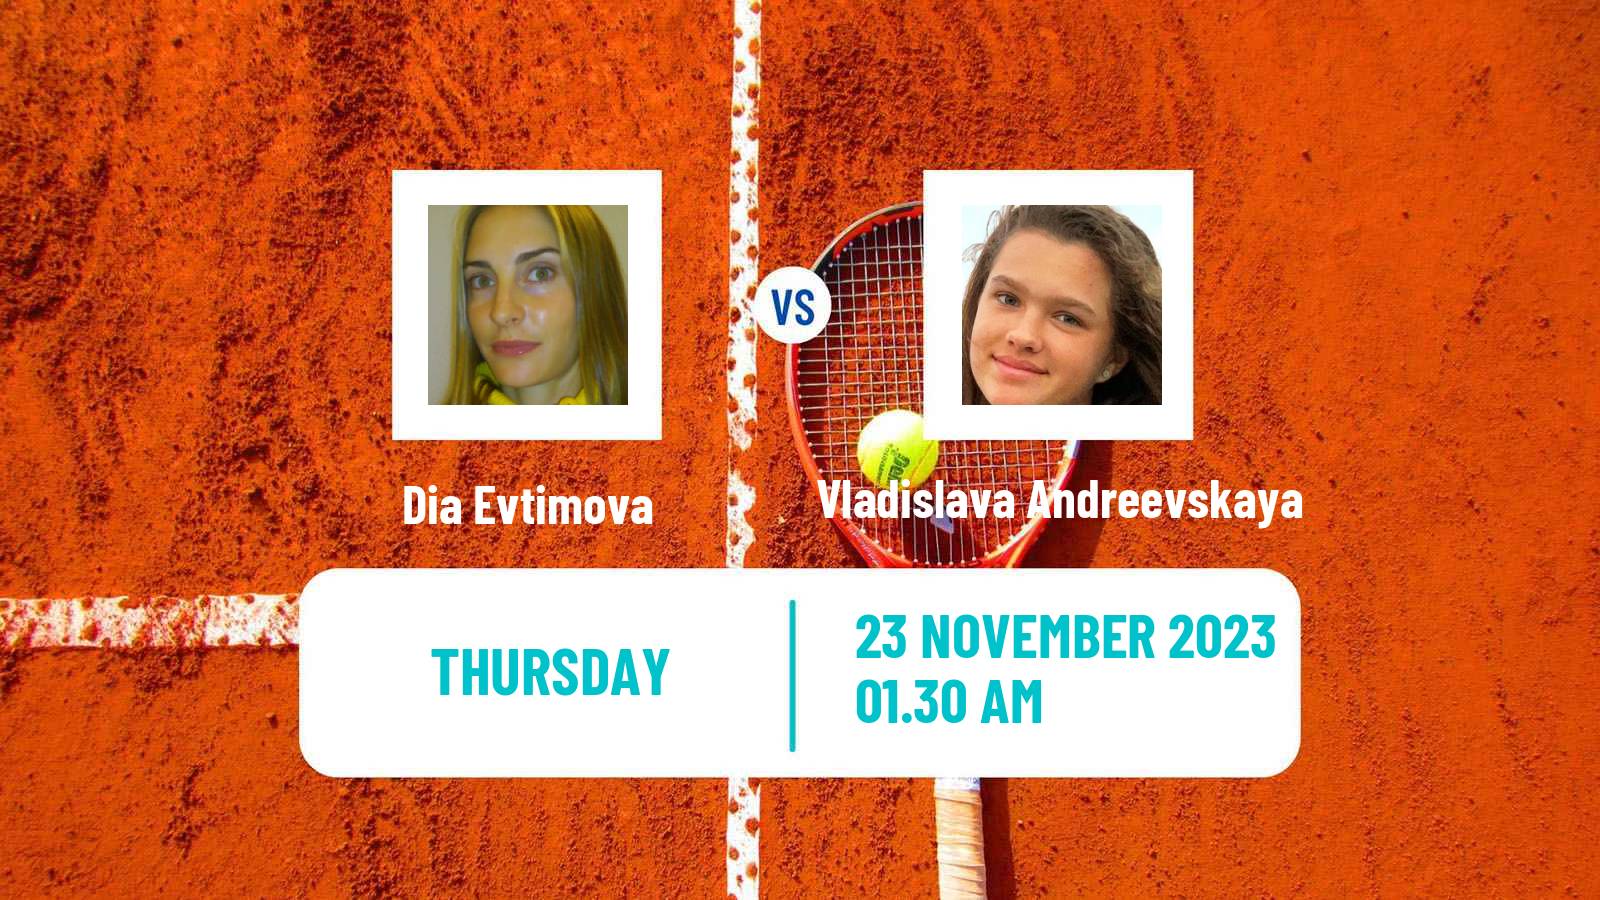 Tennis ITF W15 Antalya 19 Women Dia Evtimova - Vladislava Andreevskaya